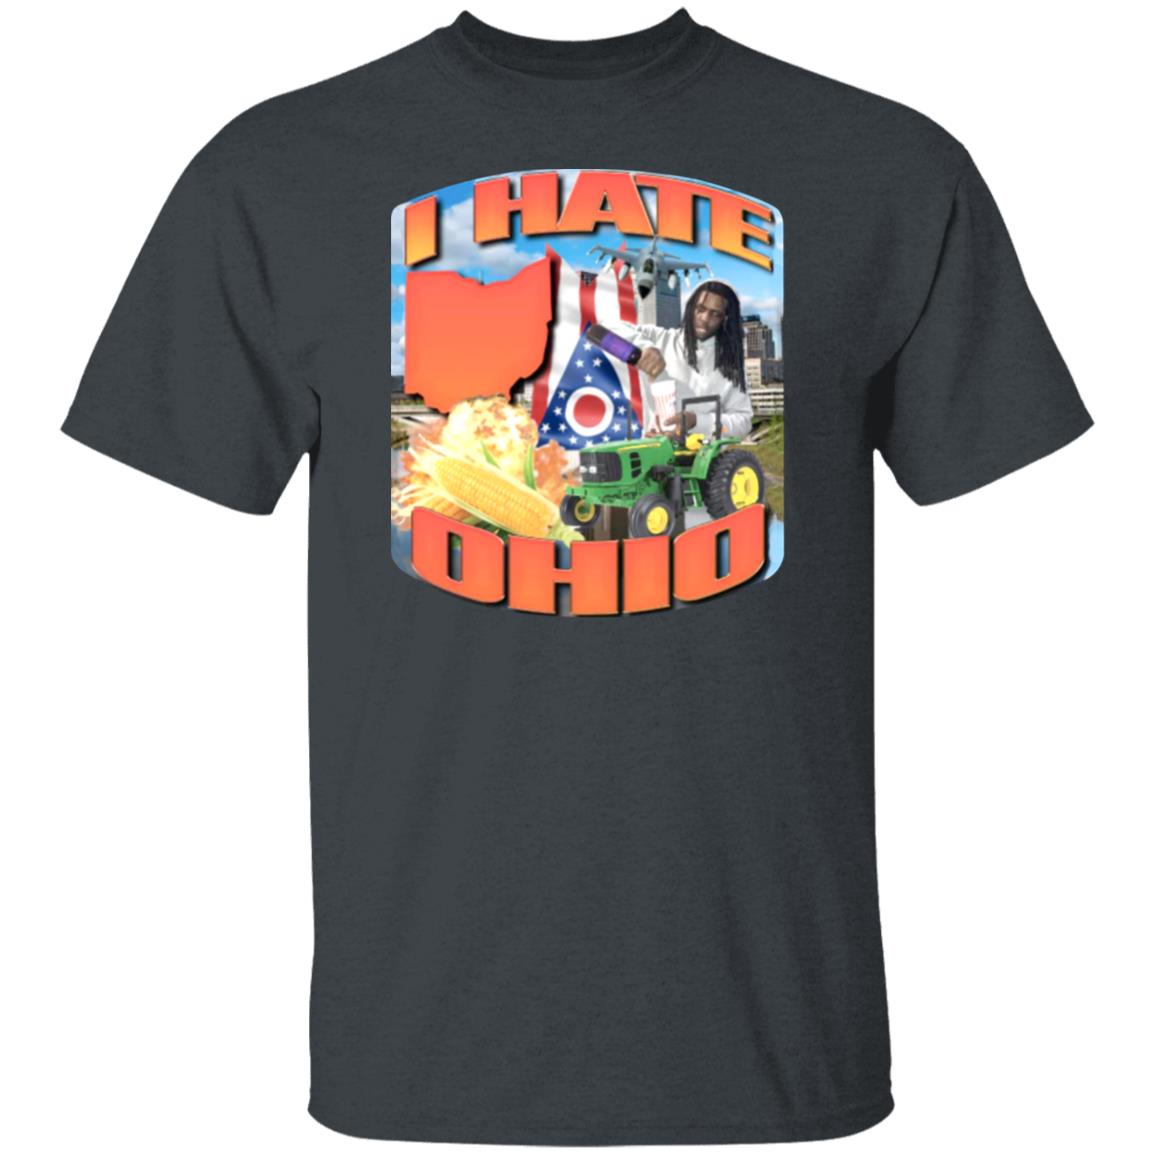 Crappy Worldwide Merch I Hate Ohio Shirt